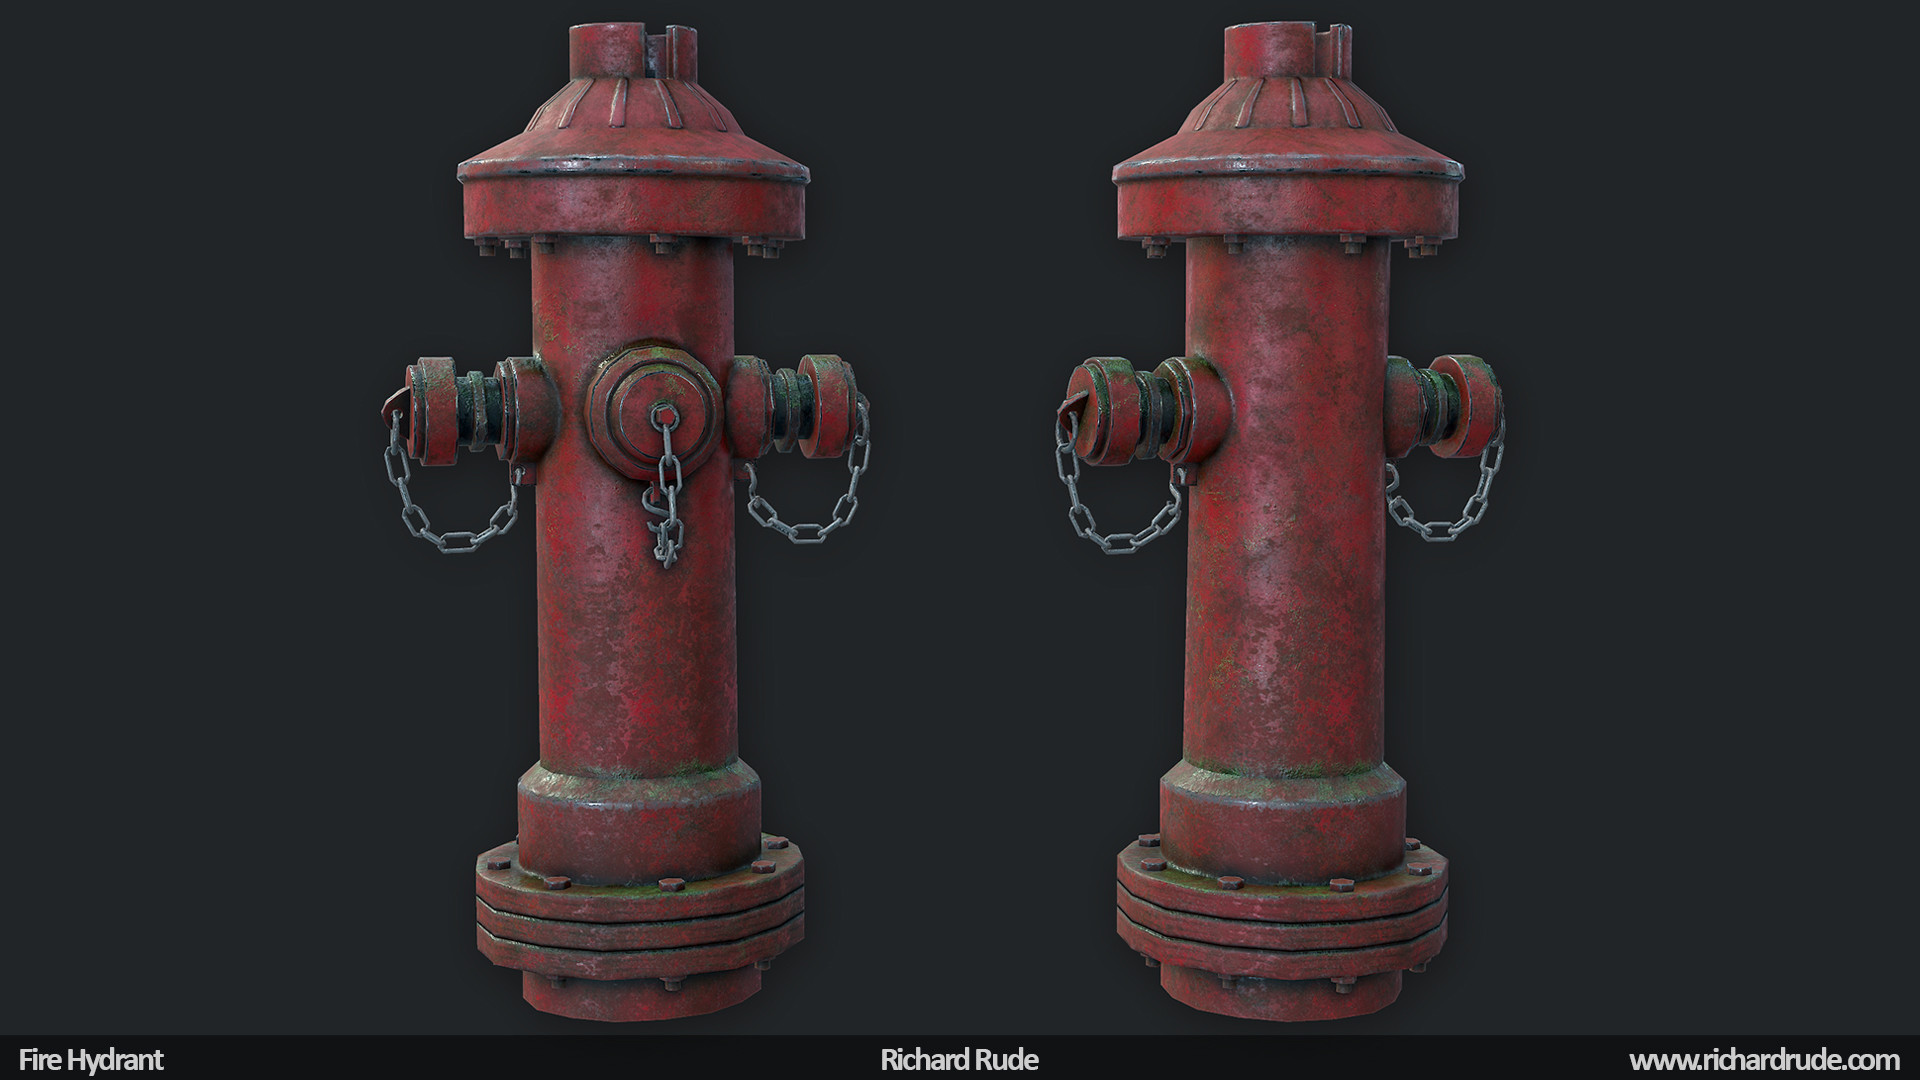 ArtStation - Fire Hydrant, Richard Rude